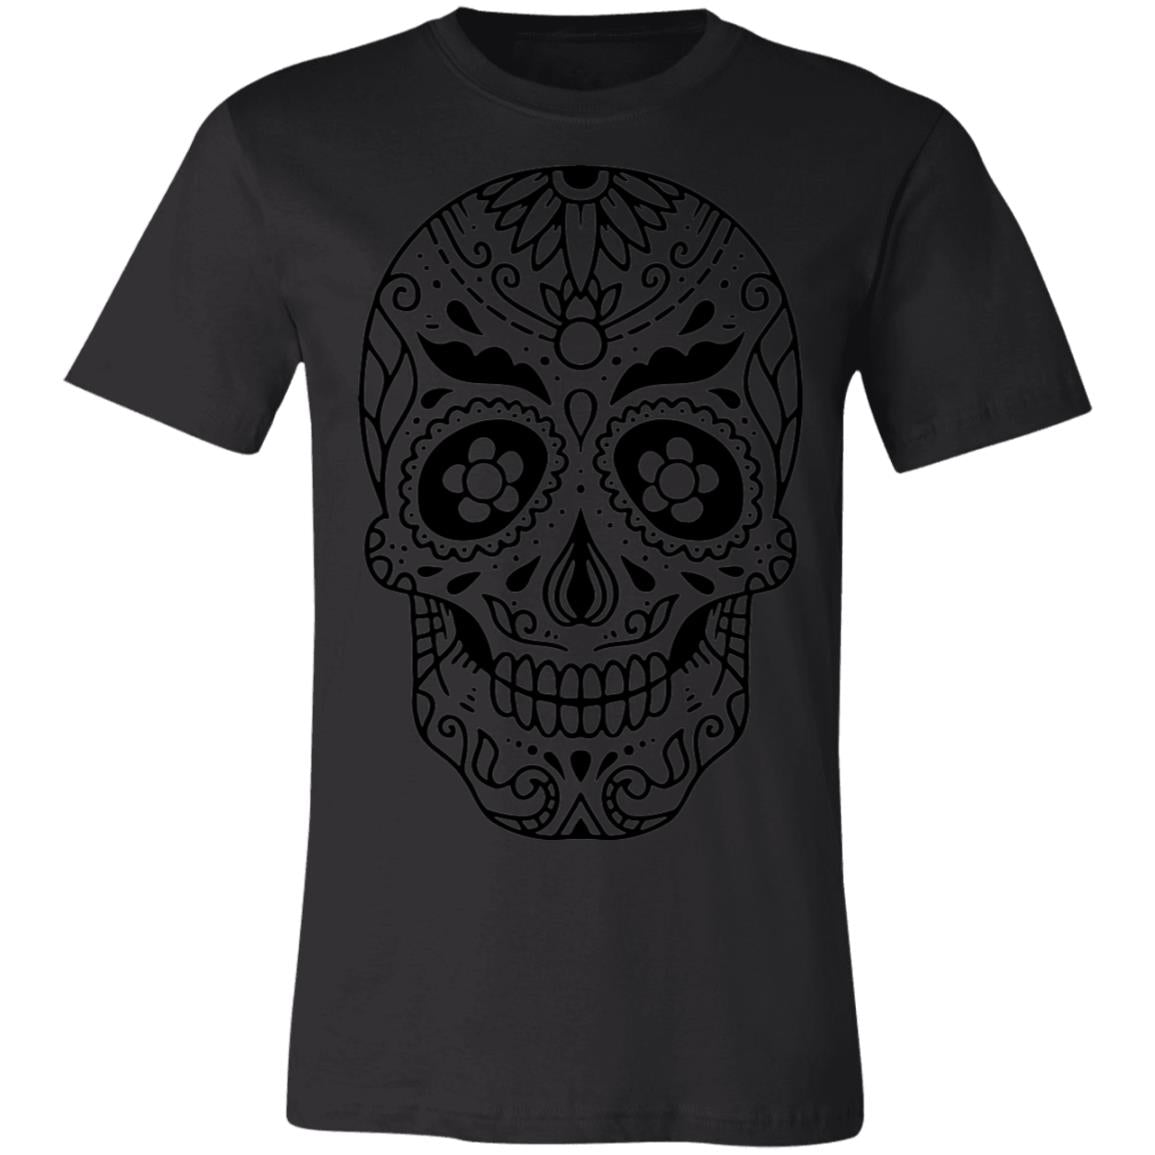 Skull 159 Santa Muerte Shirt-Express Your Love Gifts